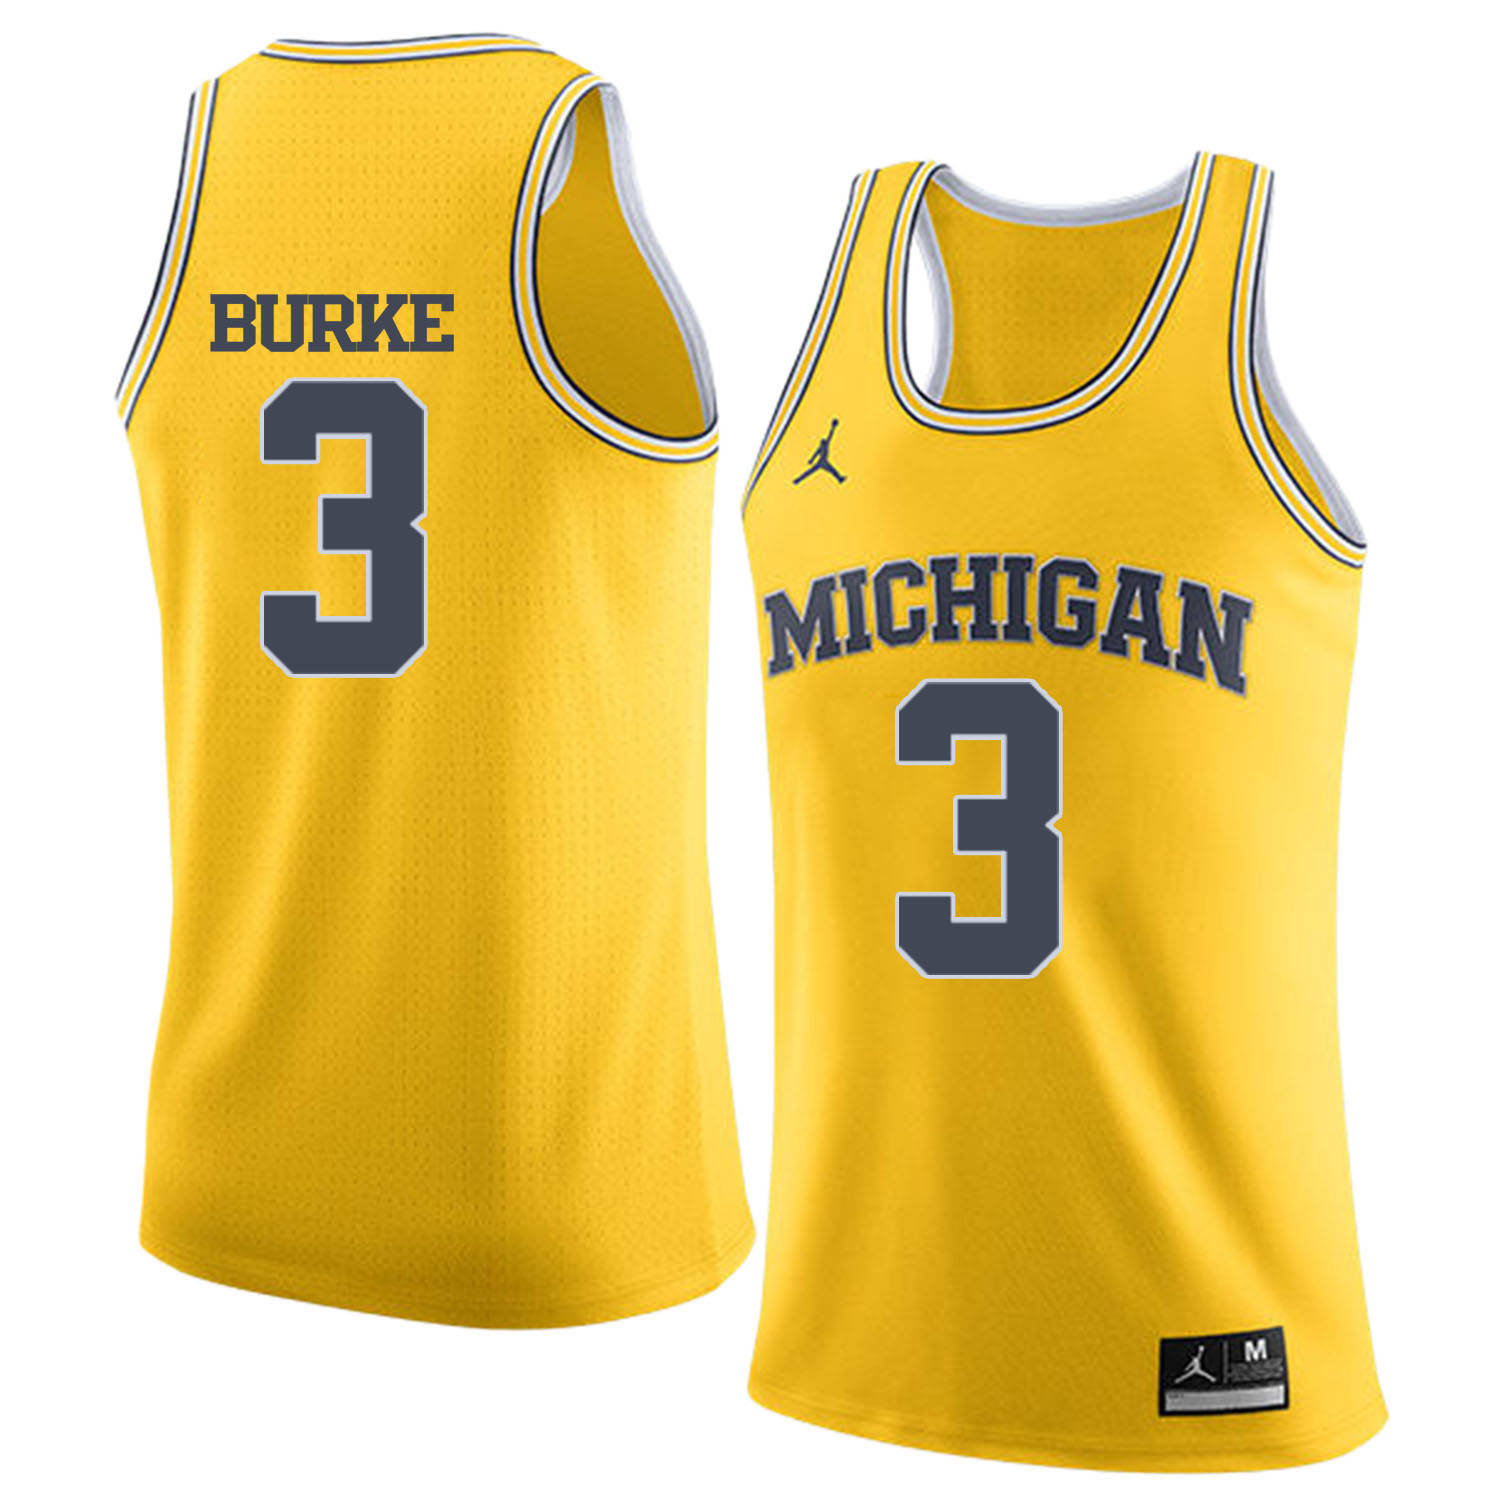 University of Michigan 3 Trey Burke Yellow College Basketball Jersey